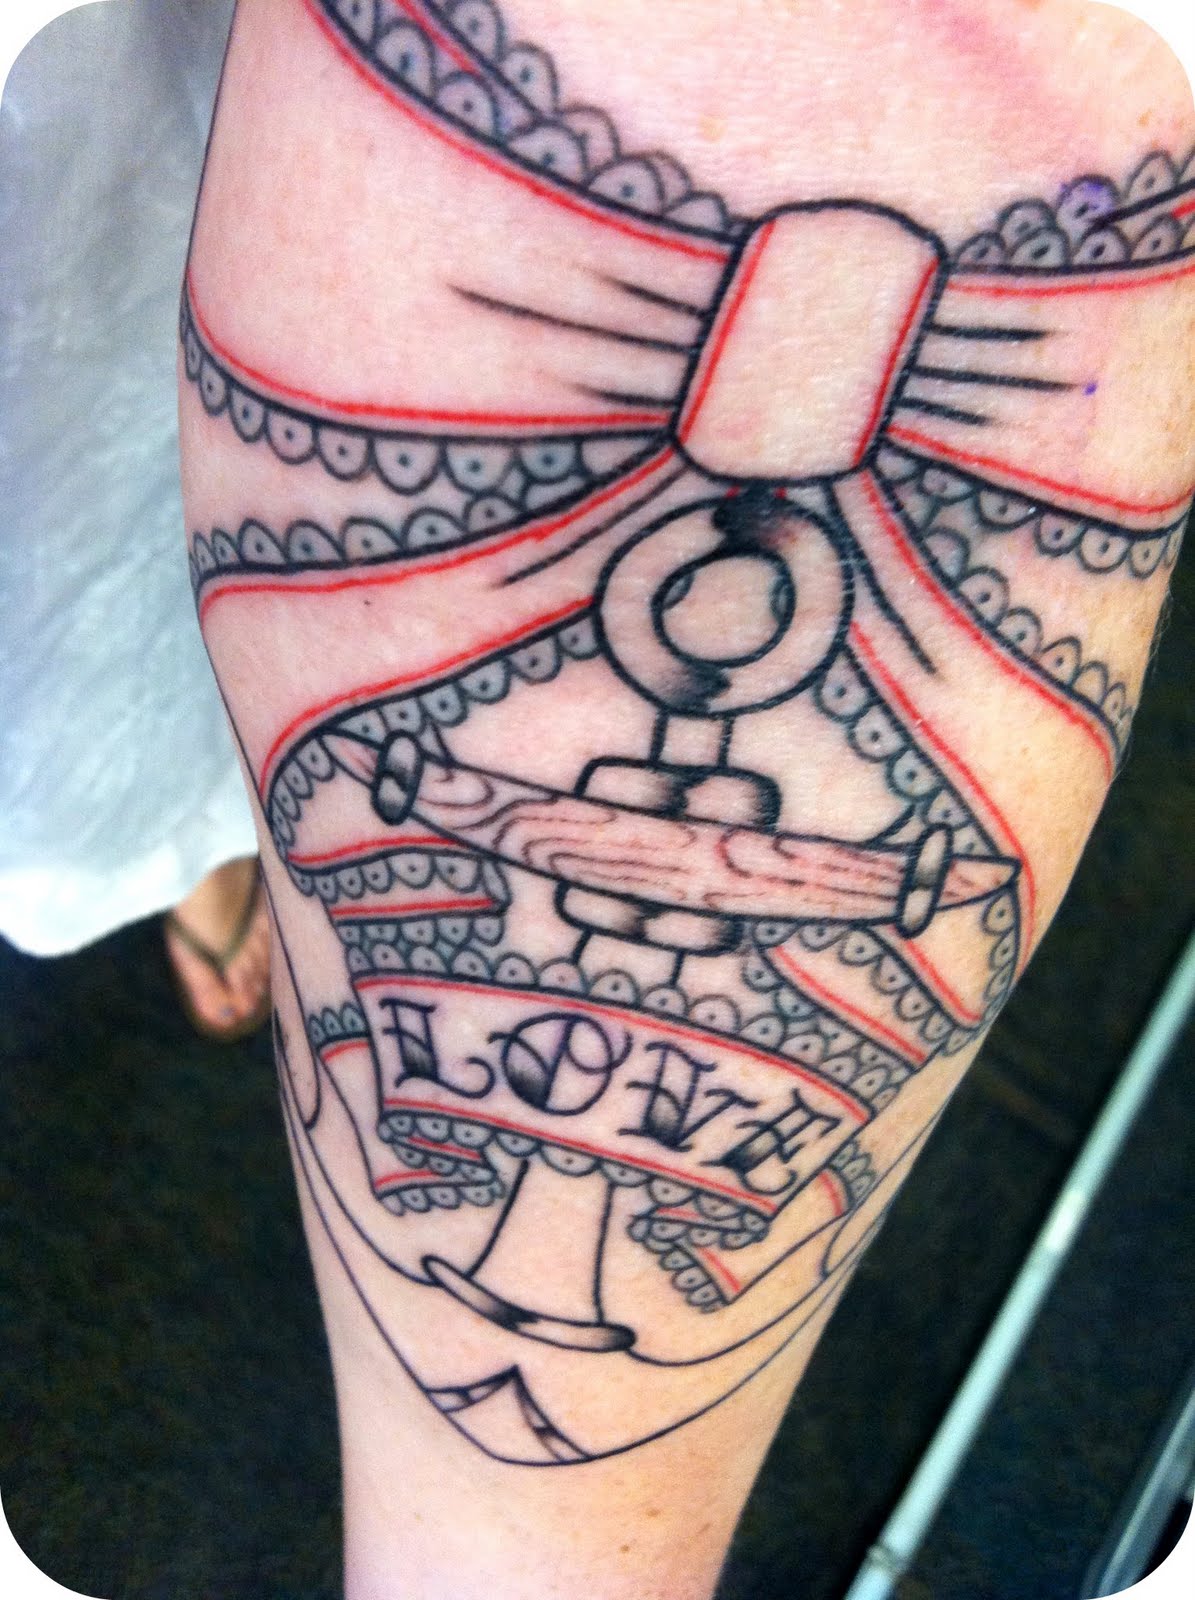 My Tattoo Designs: Anchor Heart Tattoo